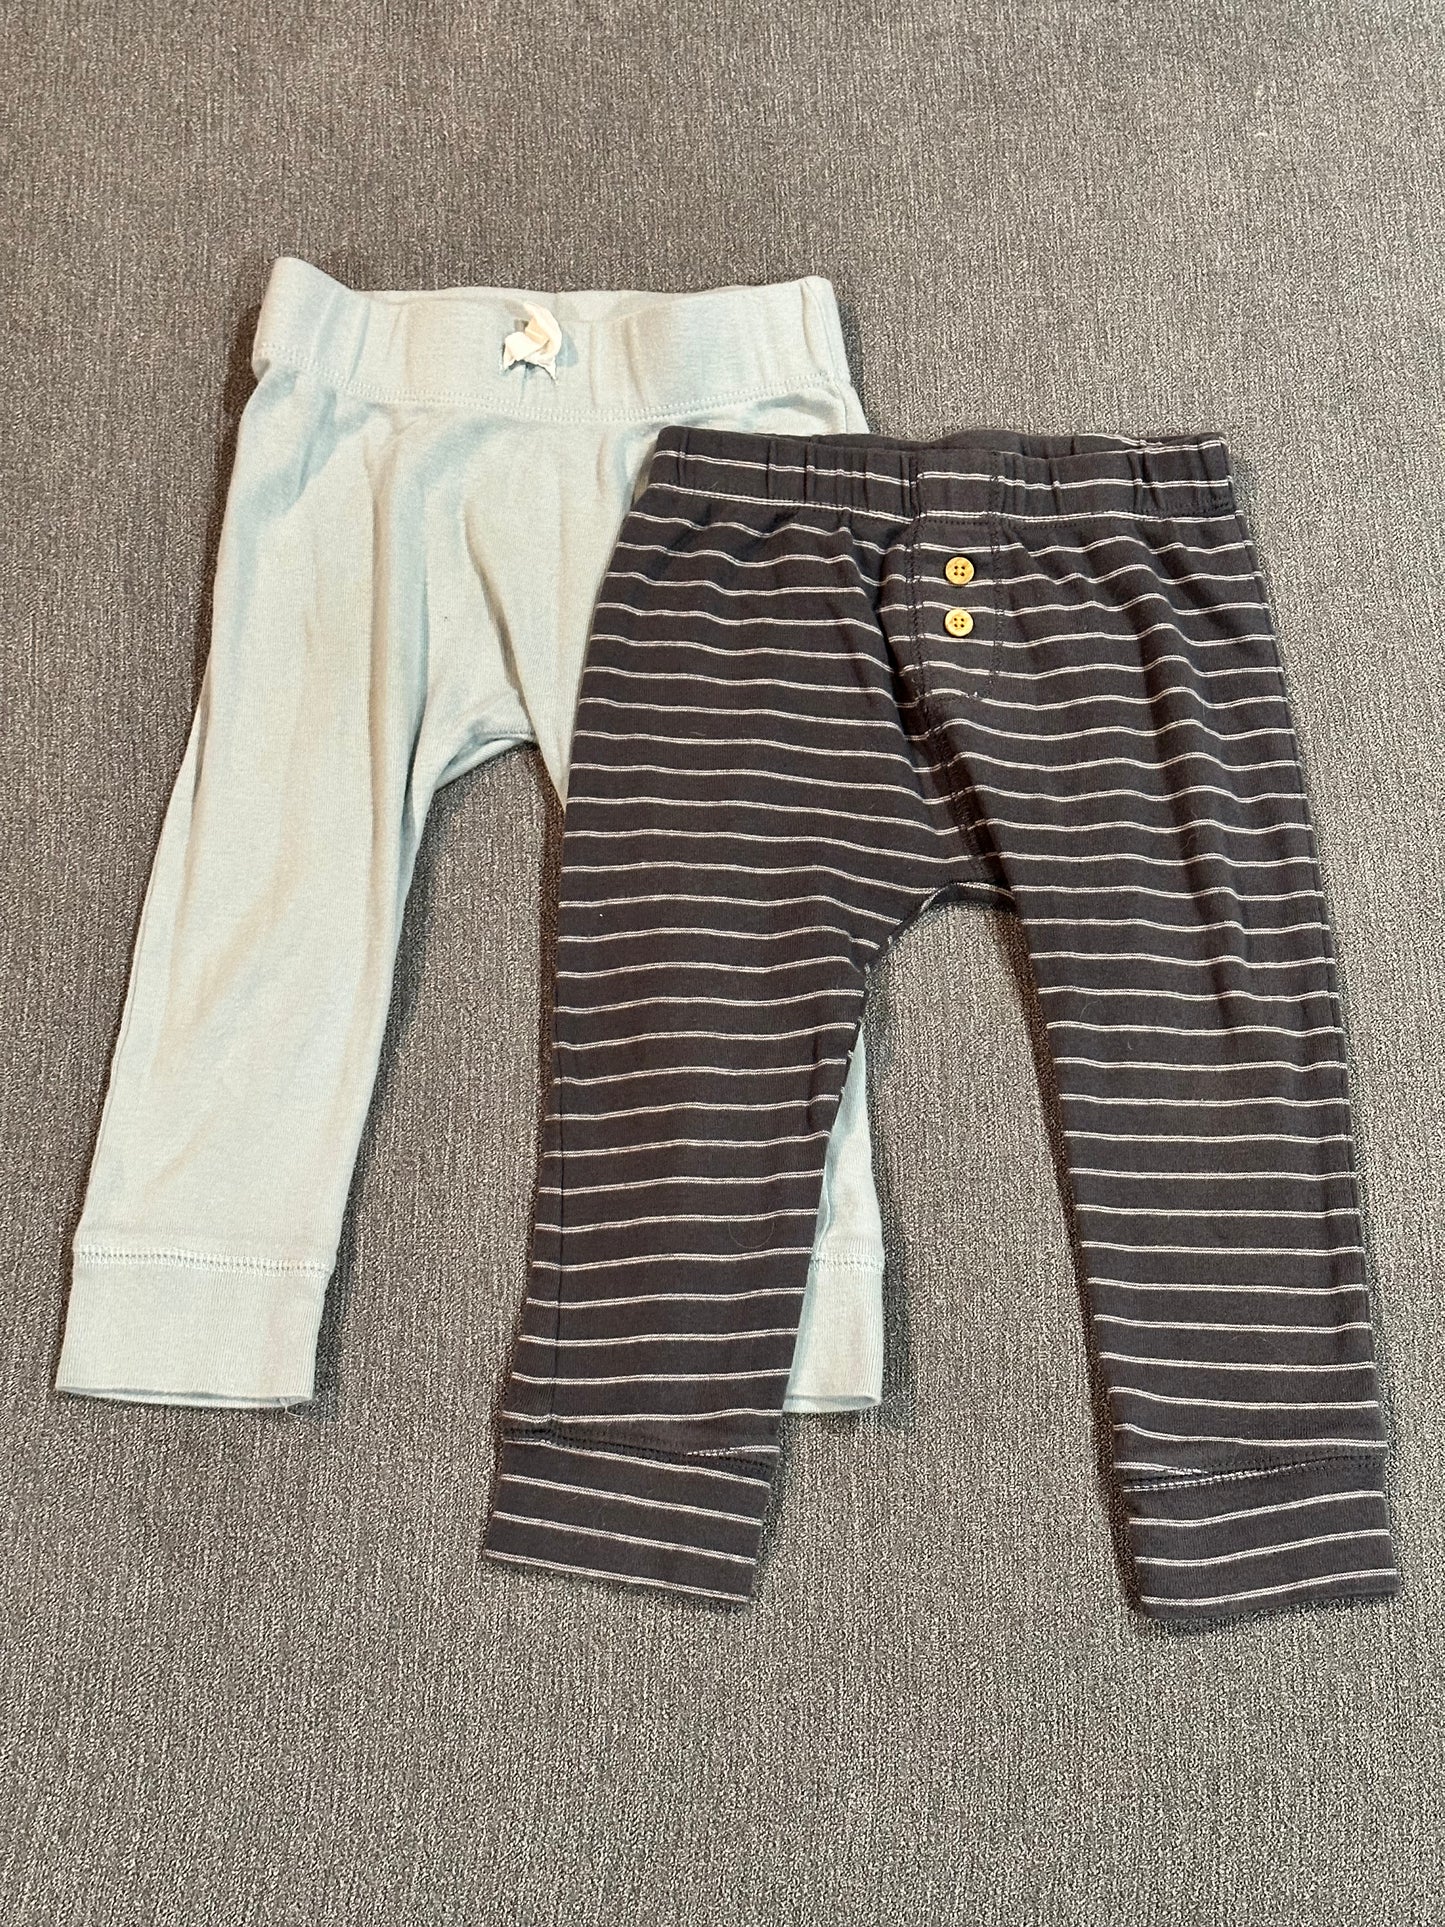 Boys 18 month 2 pack blue & grey stripe Carter’s pants